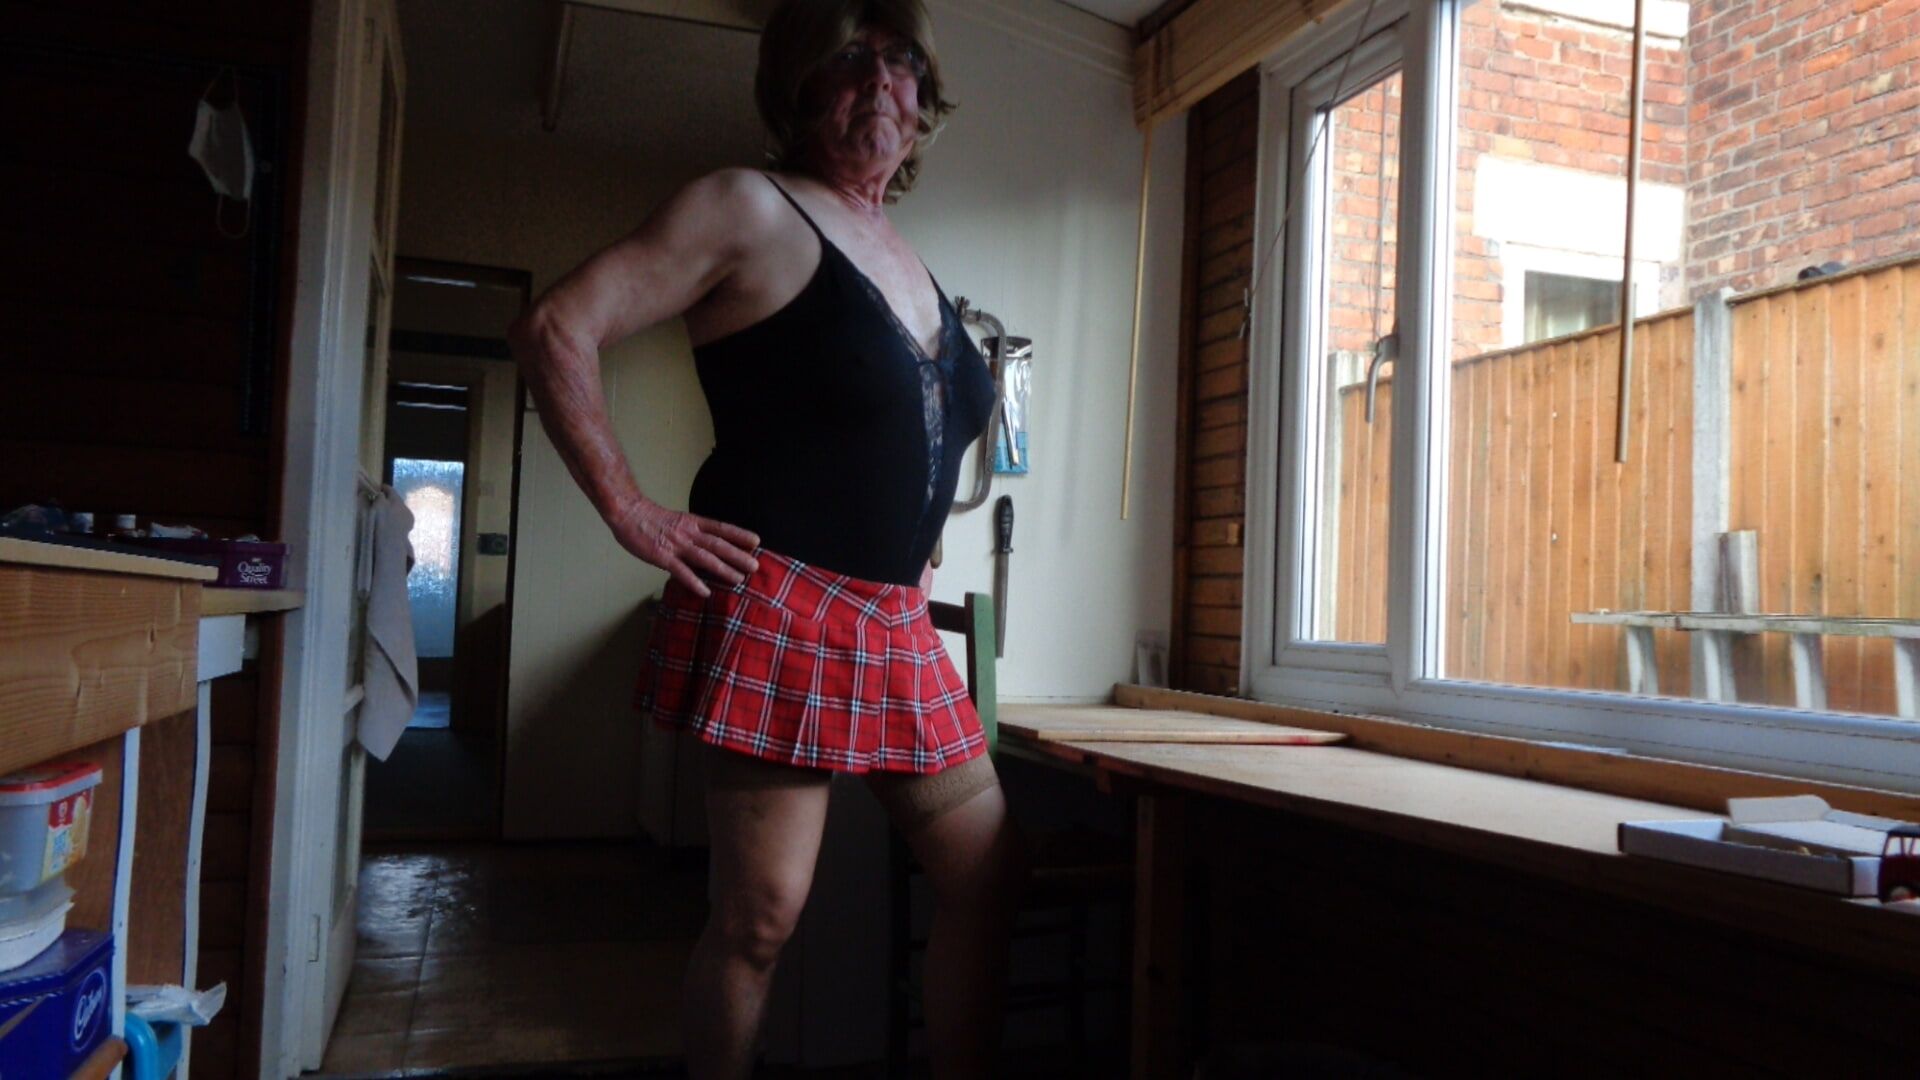 Short skirt and body stocking.